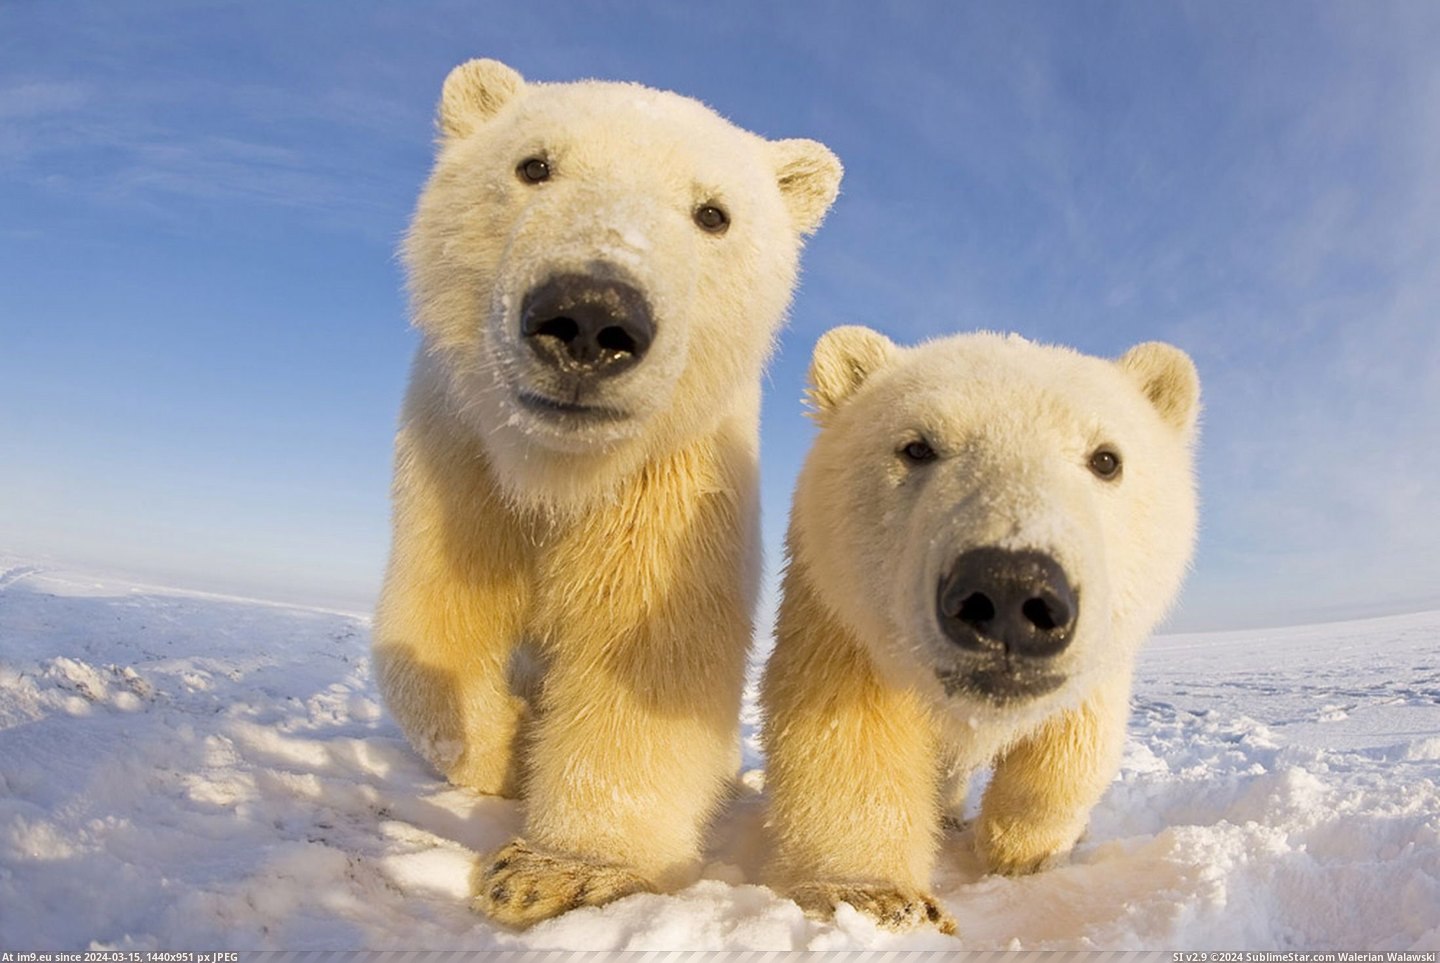 #May #Are #Strange #Any #Noise #Object #Investigate #Polarbears #Polar #Curious #Smell #Bears [Aww] Polar bears are curious and may investigate any strange object, smell or noise (polarbears) Pic. (Изображение из альбом My r/AWW favs))